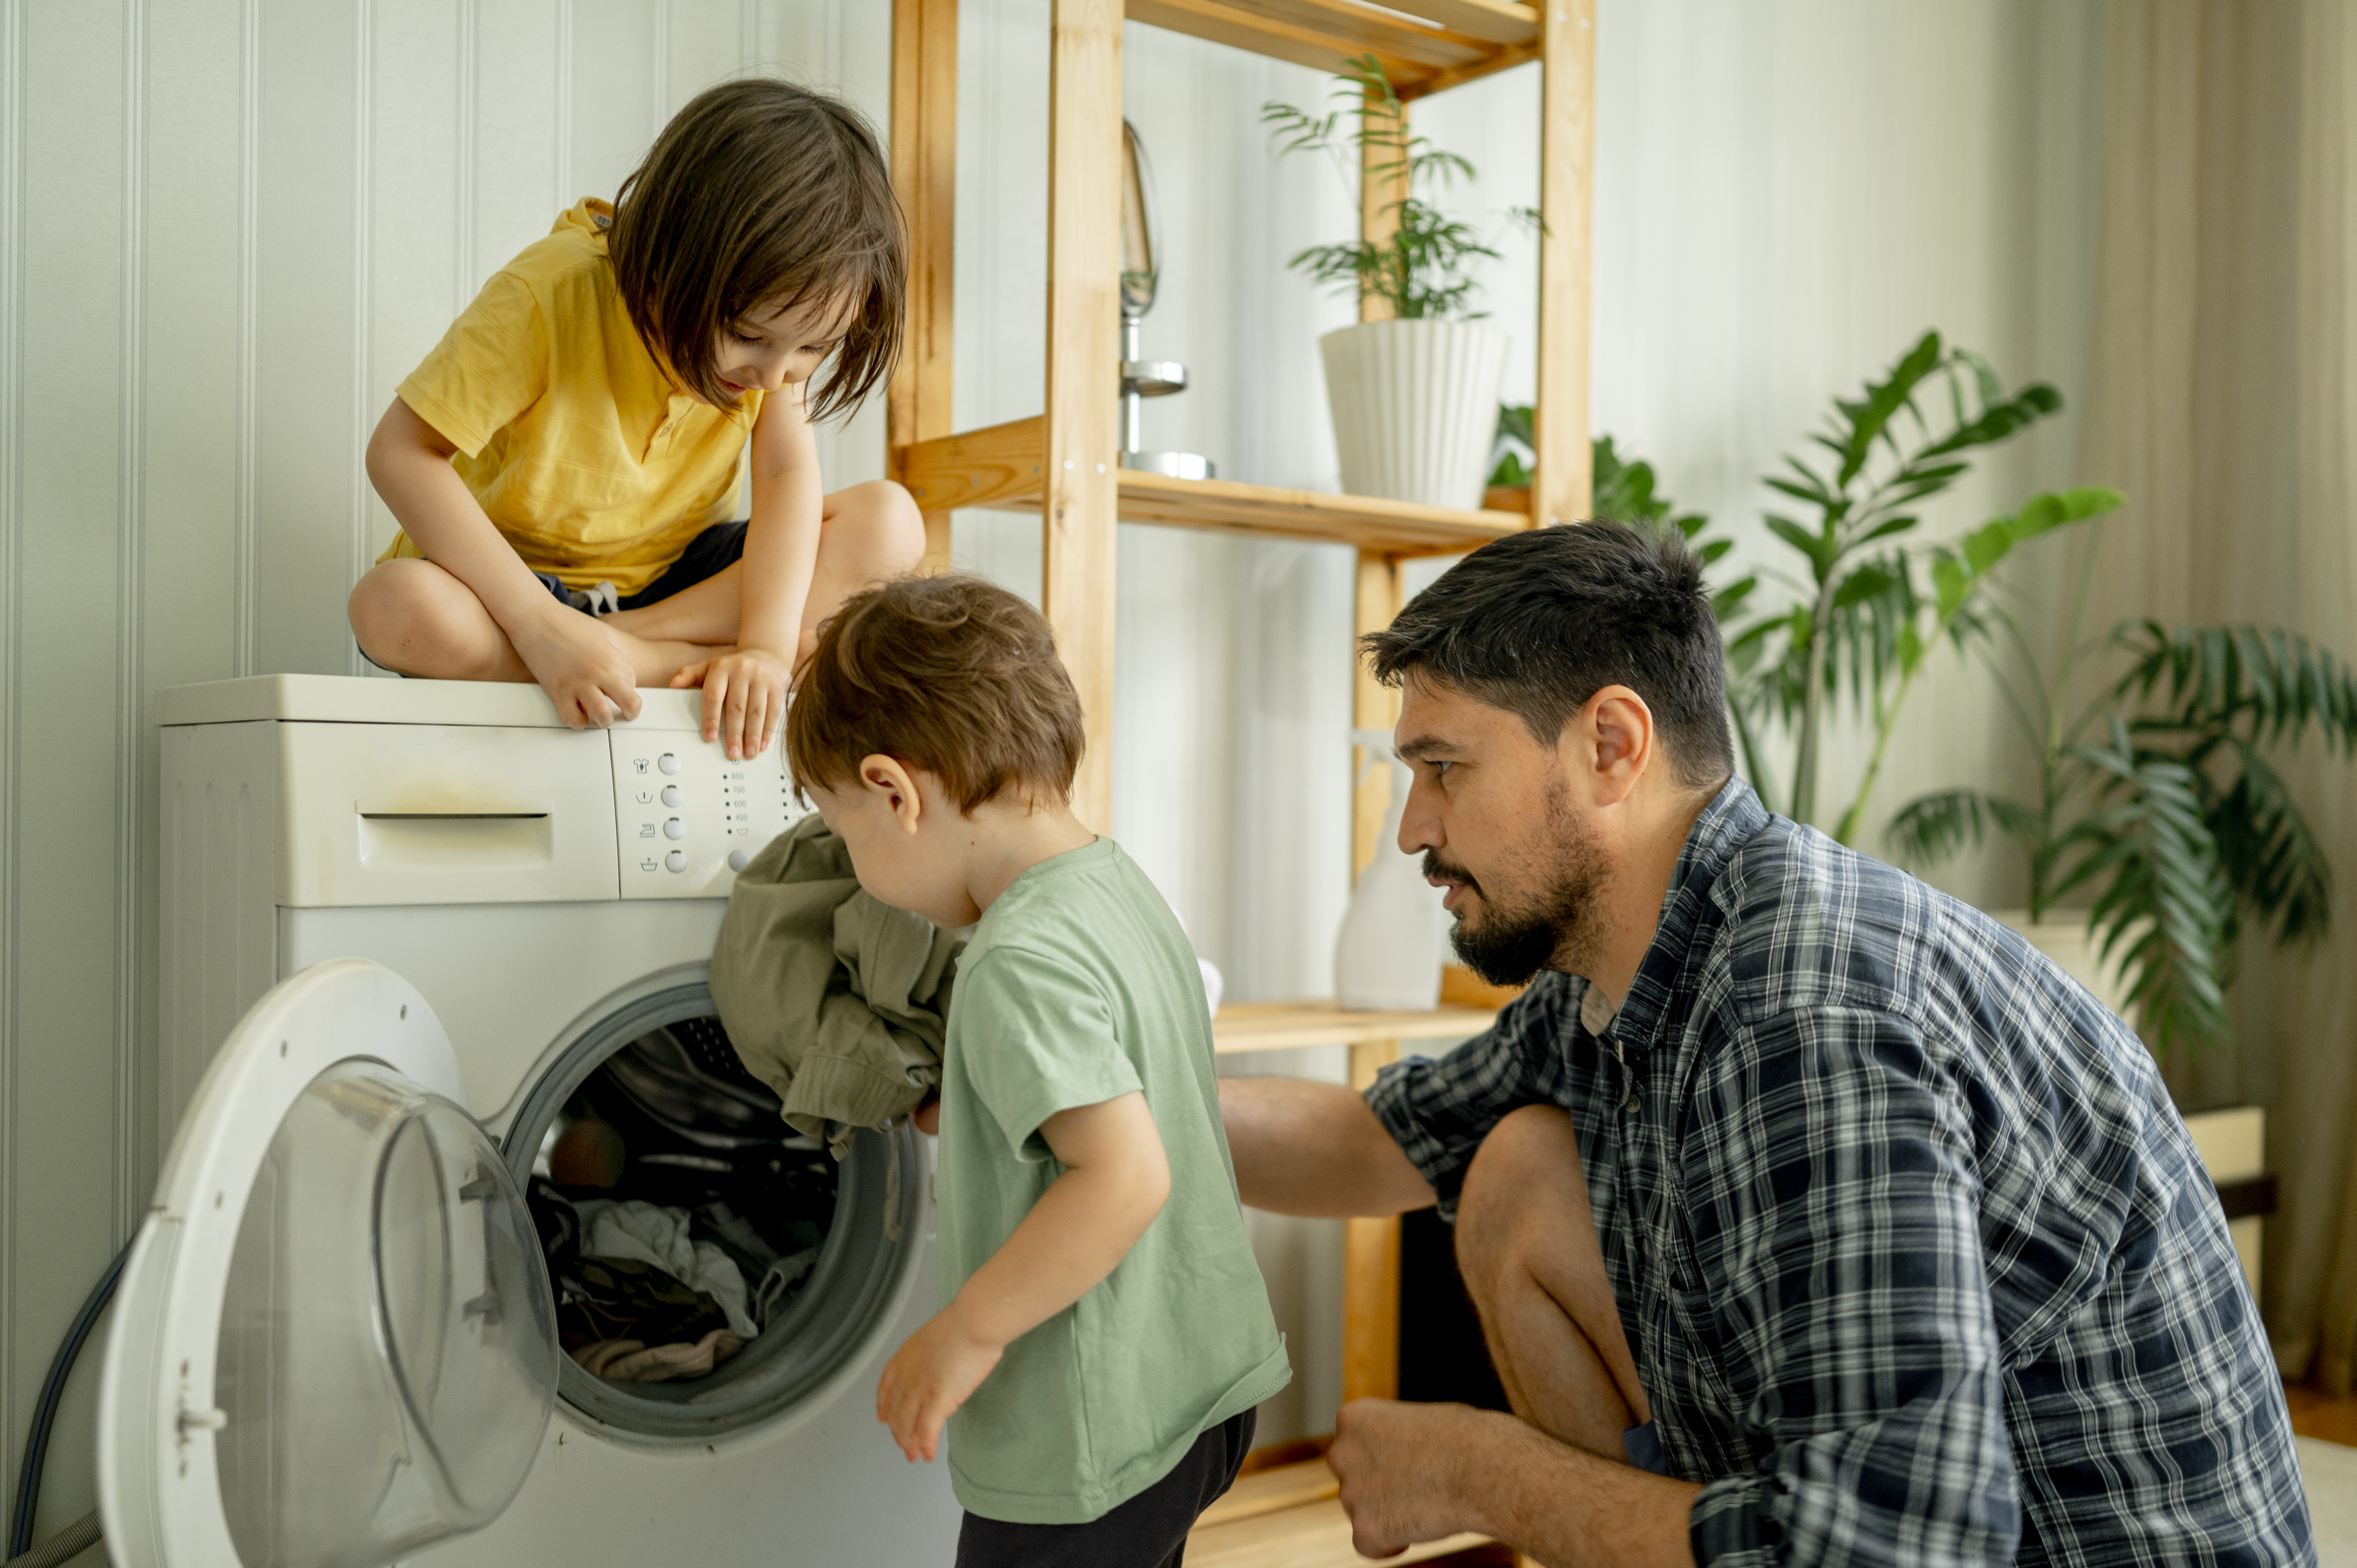 Padre e hijos cargando la lavadora | Foto: Getty Images